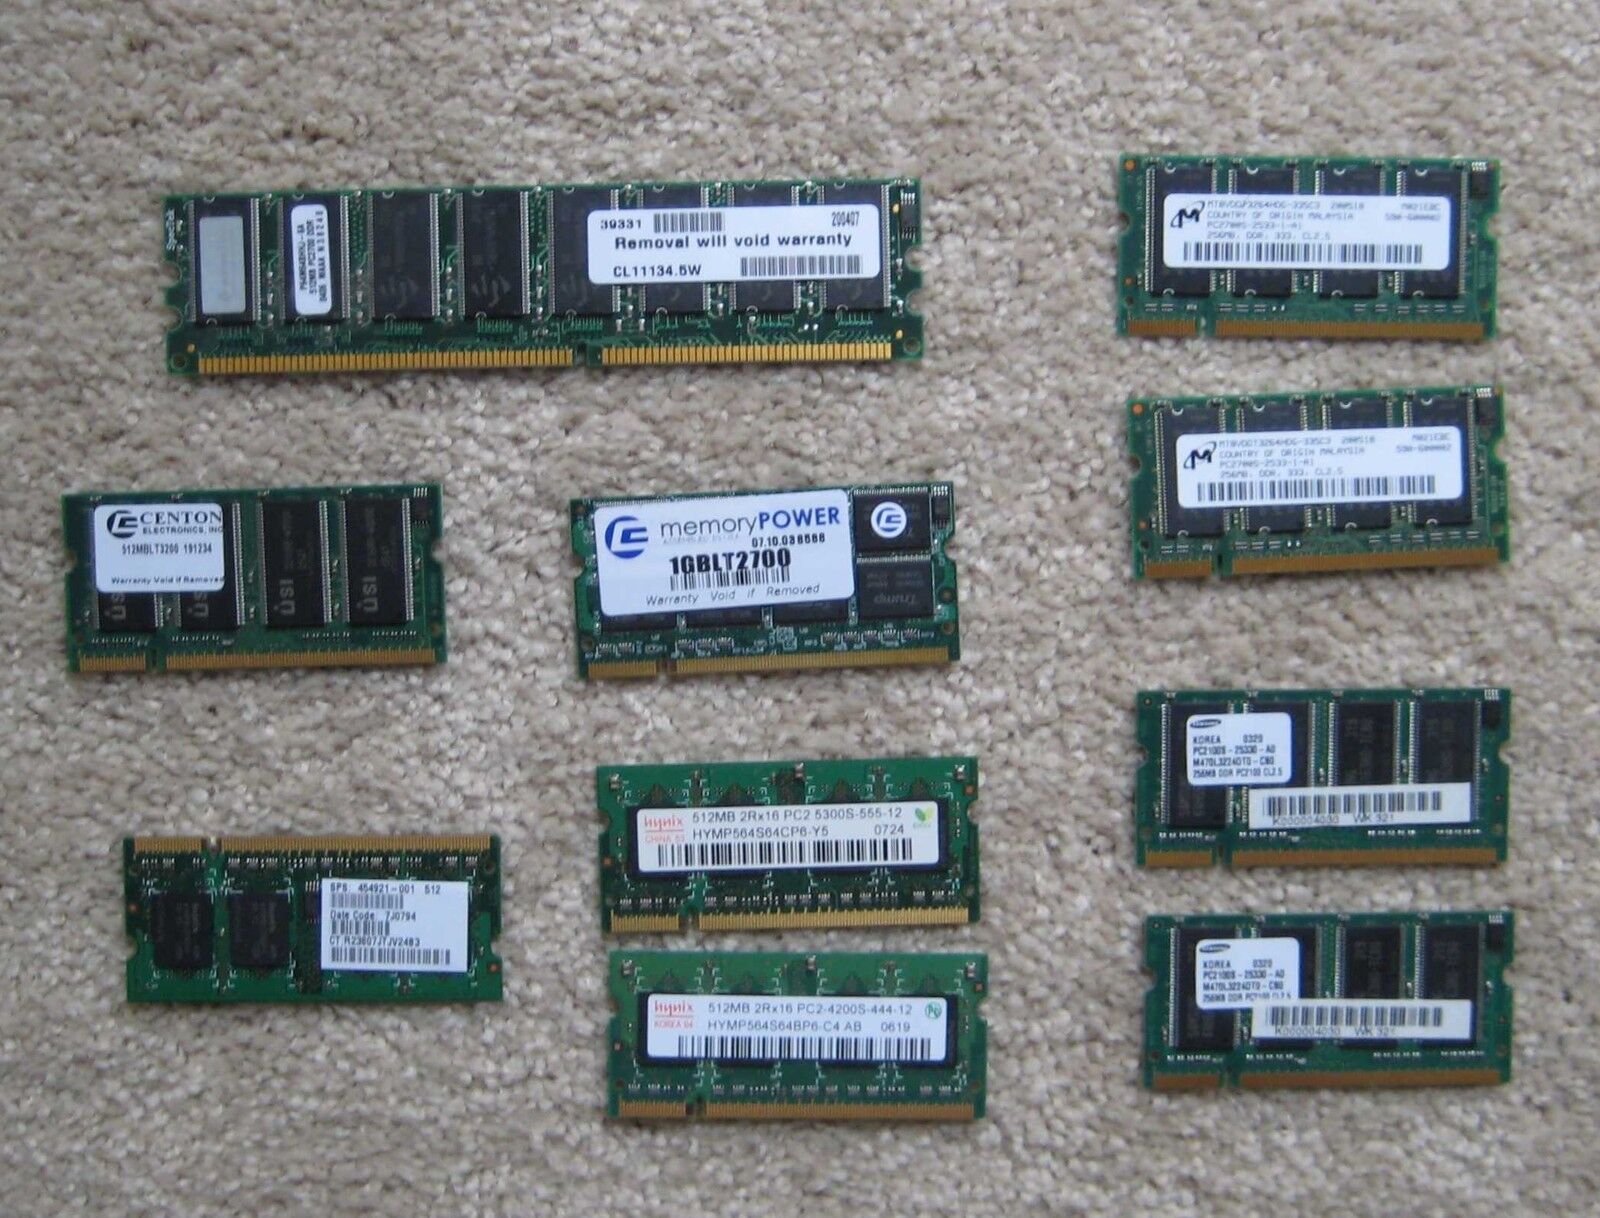 LOT OF TEN (10) ASSORTED LAPTOP AND DESKTOP RAM MEMORY STICKS - 4.5 GB - AUCTION